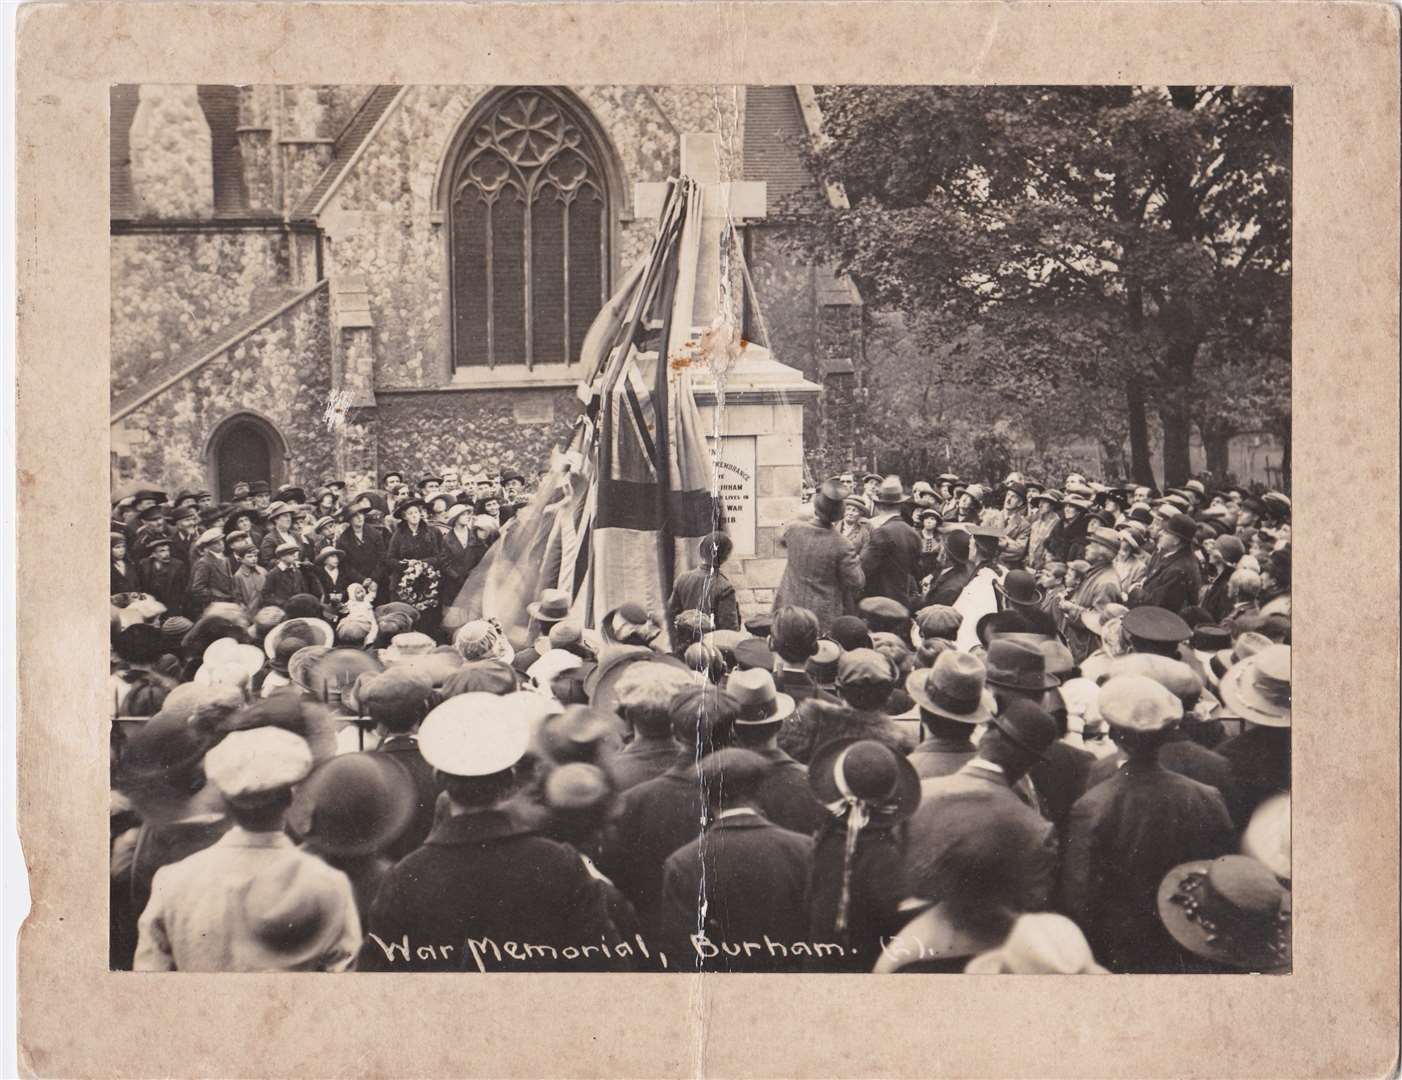 The unveiling of Burham War Memorial in 1921